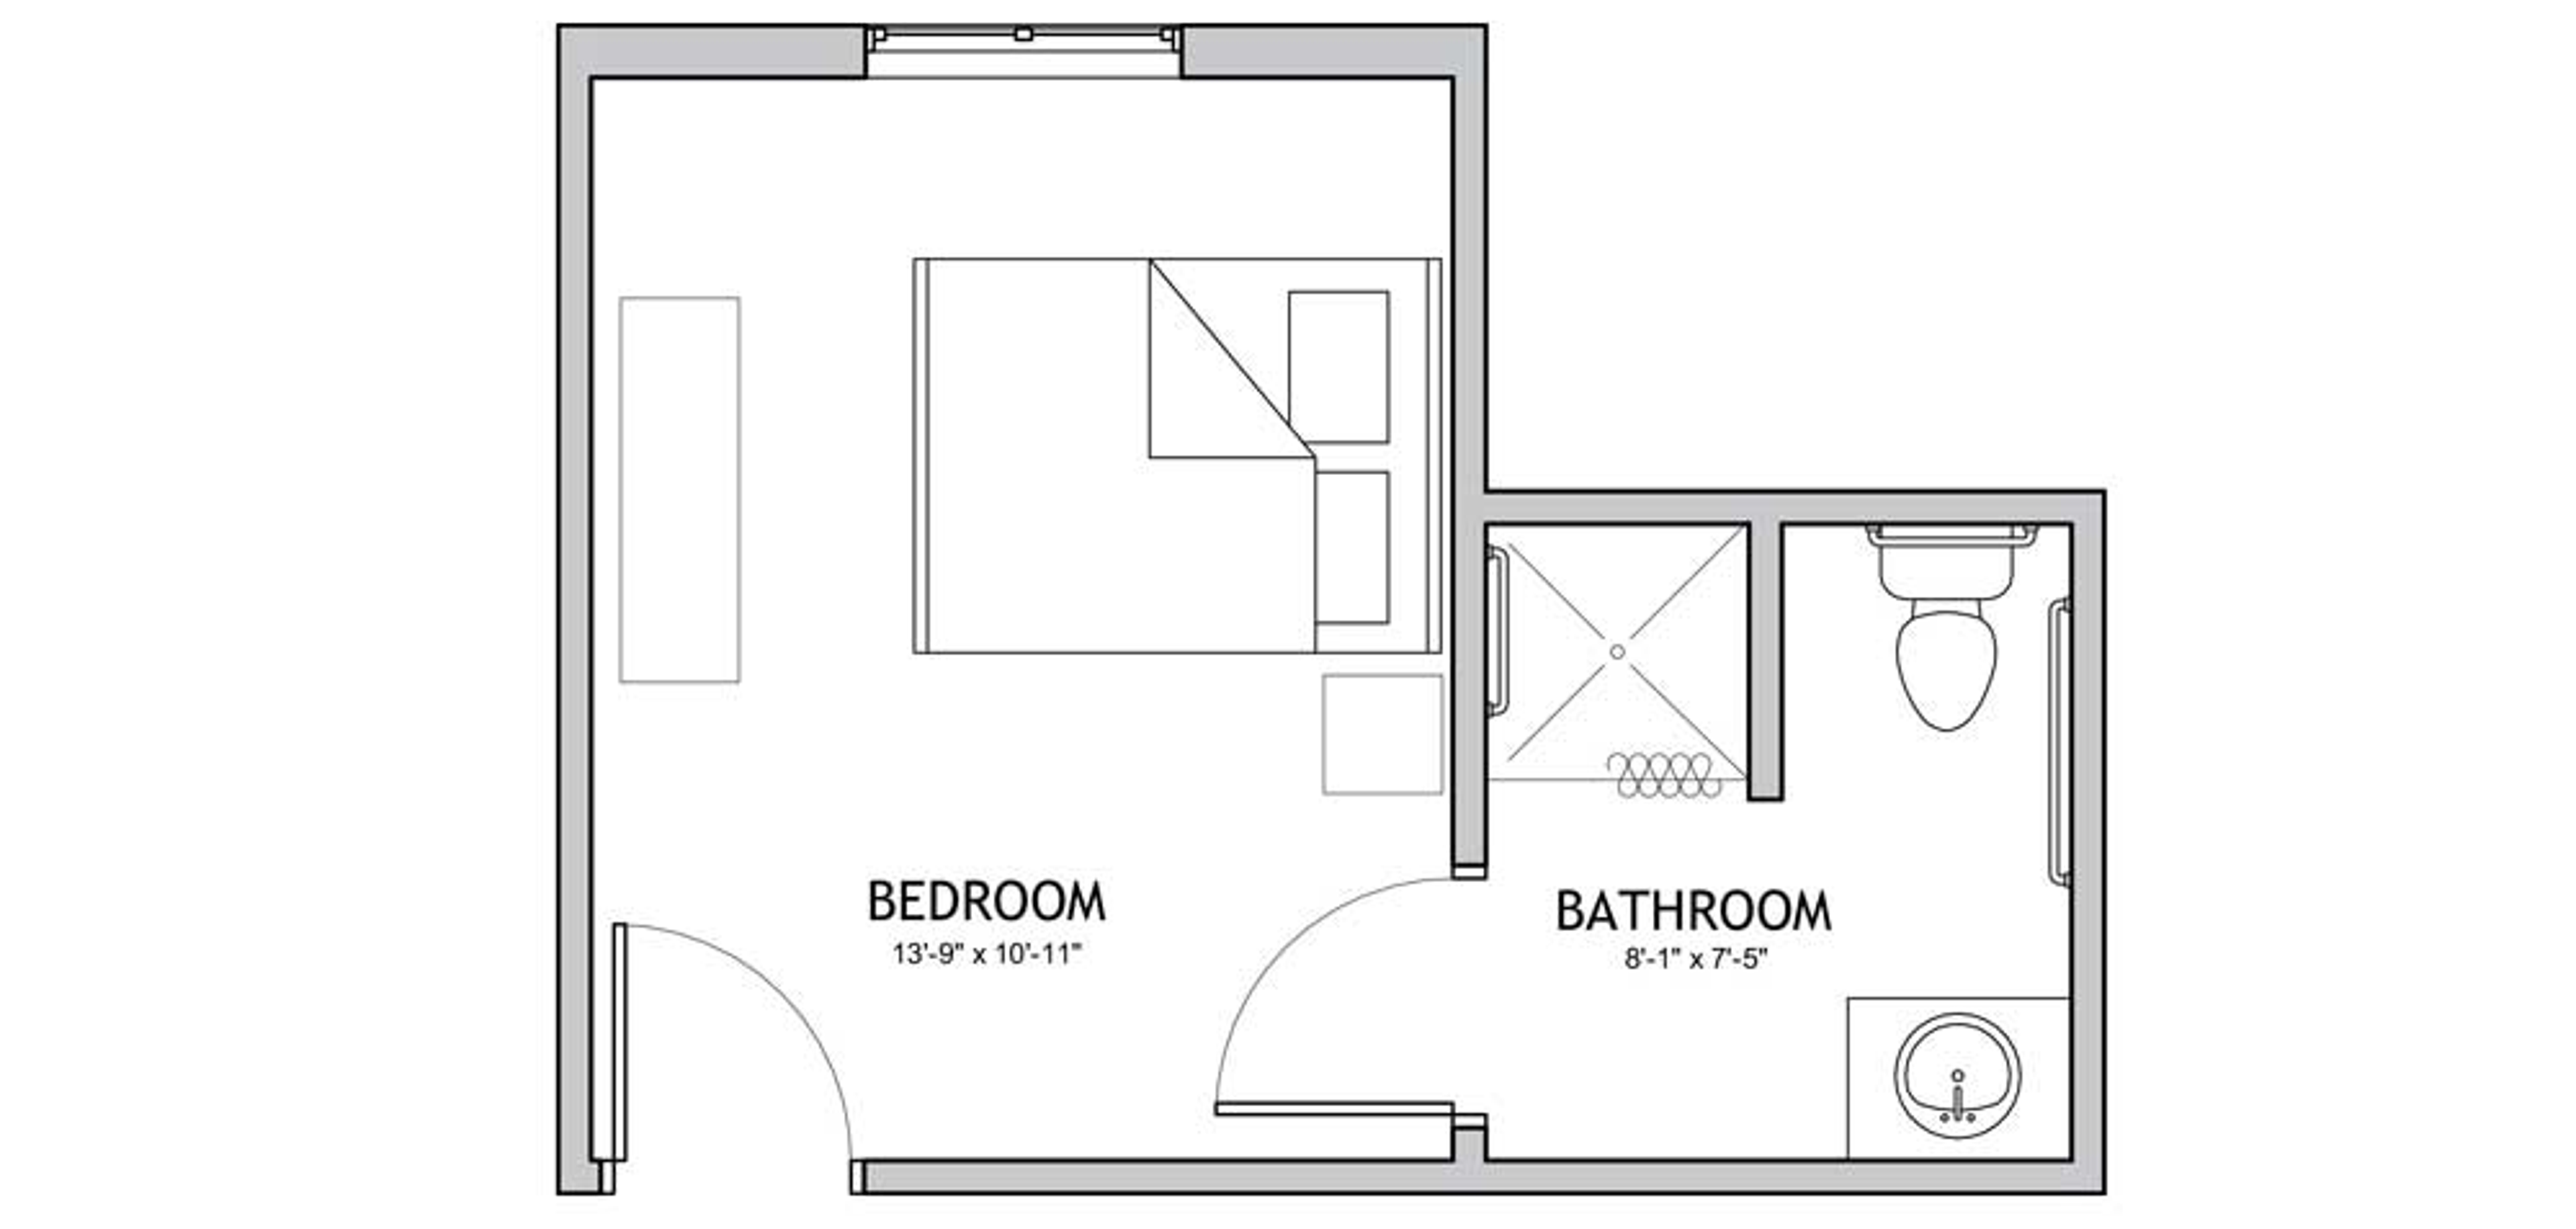 Floorplan - The Auberge Peoria - 1 bed, 1 bath, Private Suite Memory Care